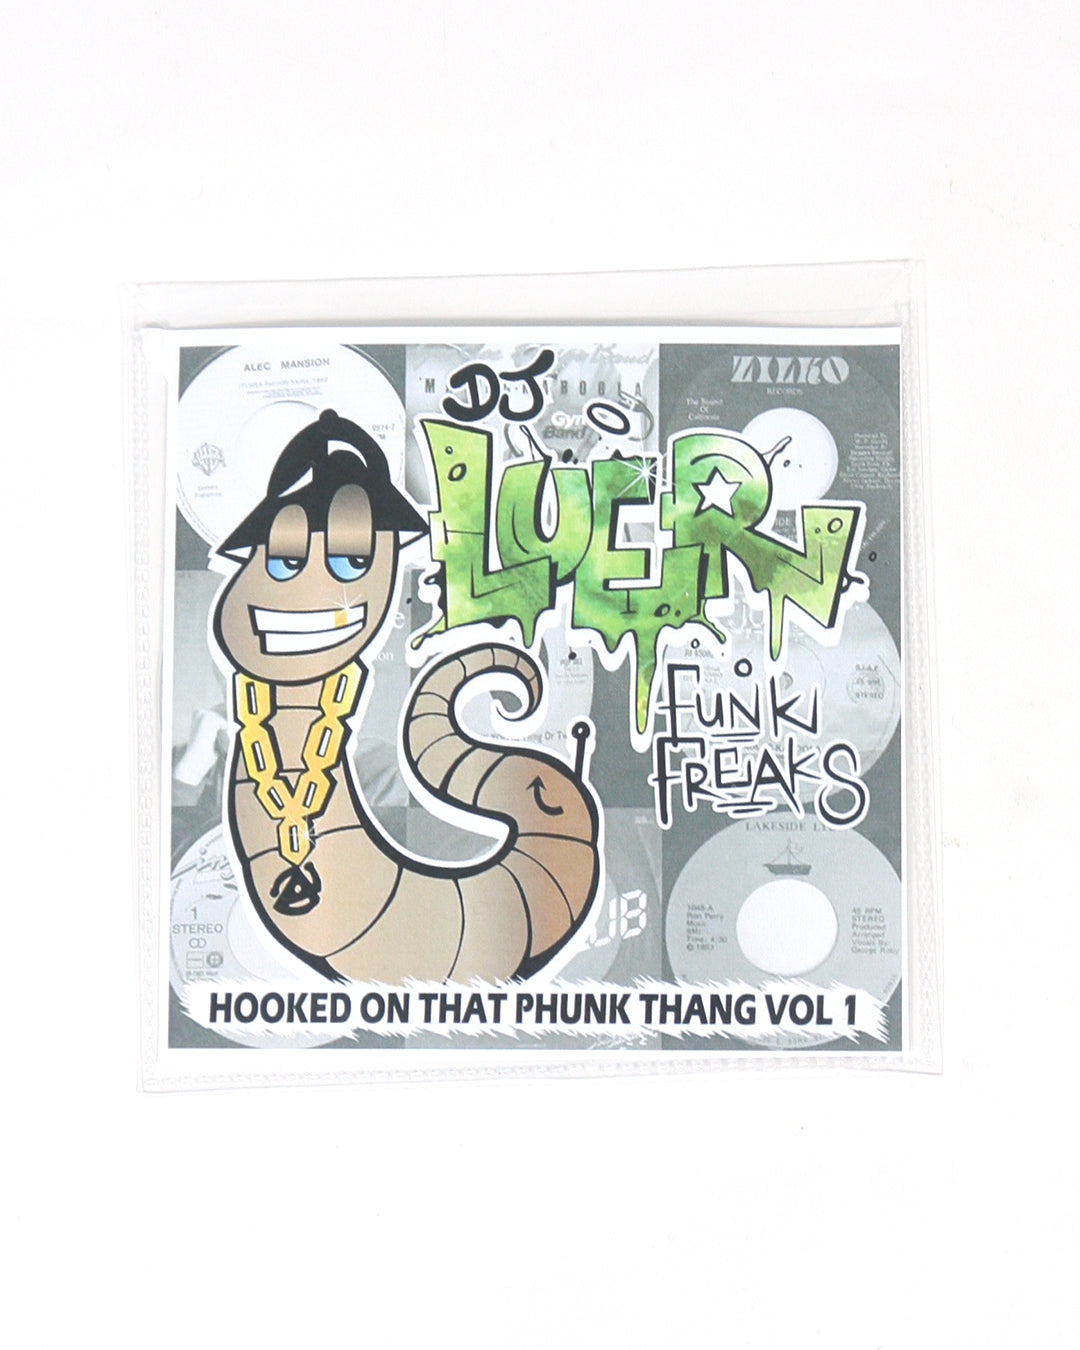 HOOKED ON PHUNK VOL 1 / DJ LUER  (MIX CD) FUNKFREAKS RECORDS